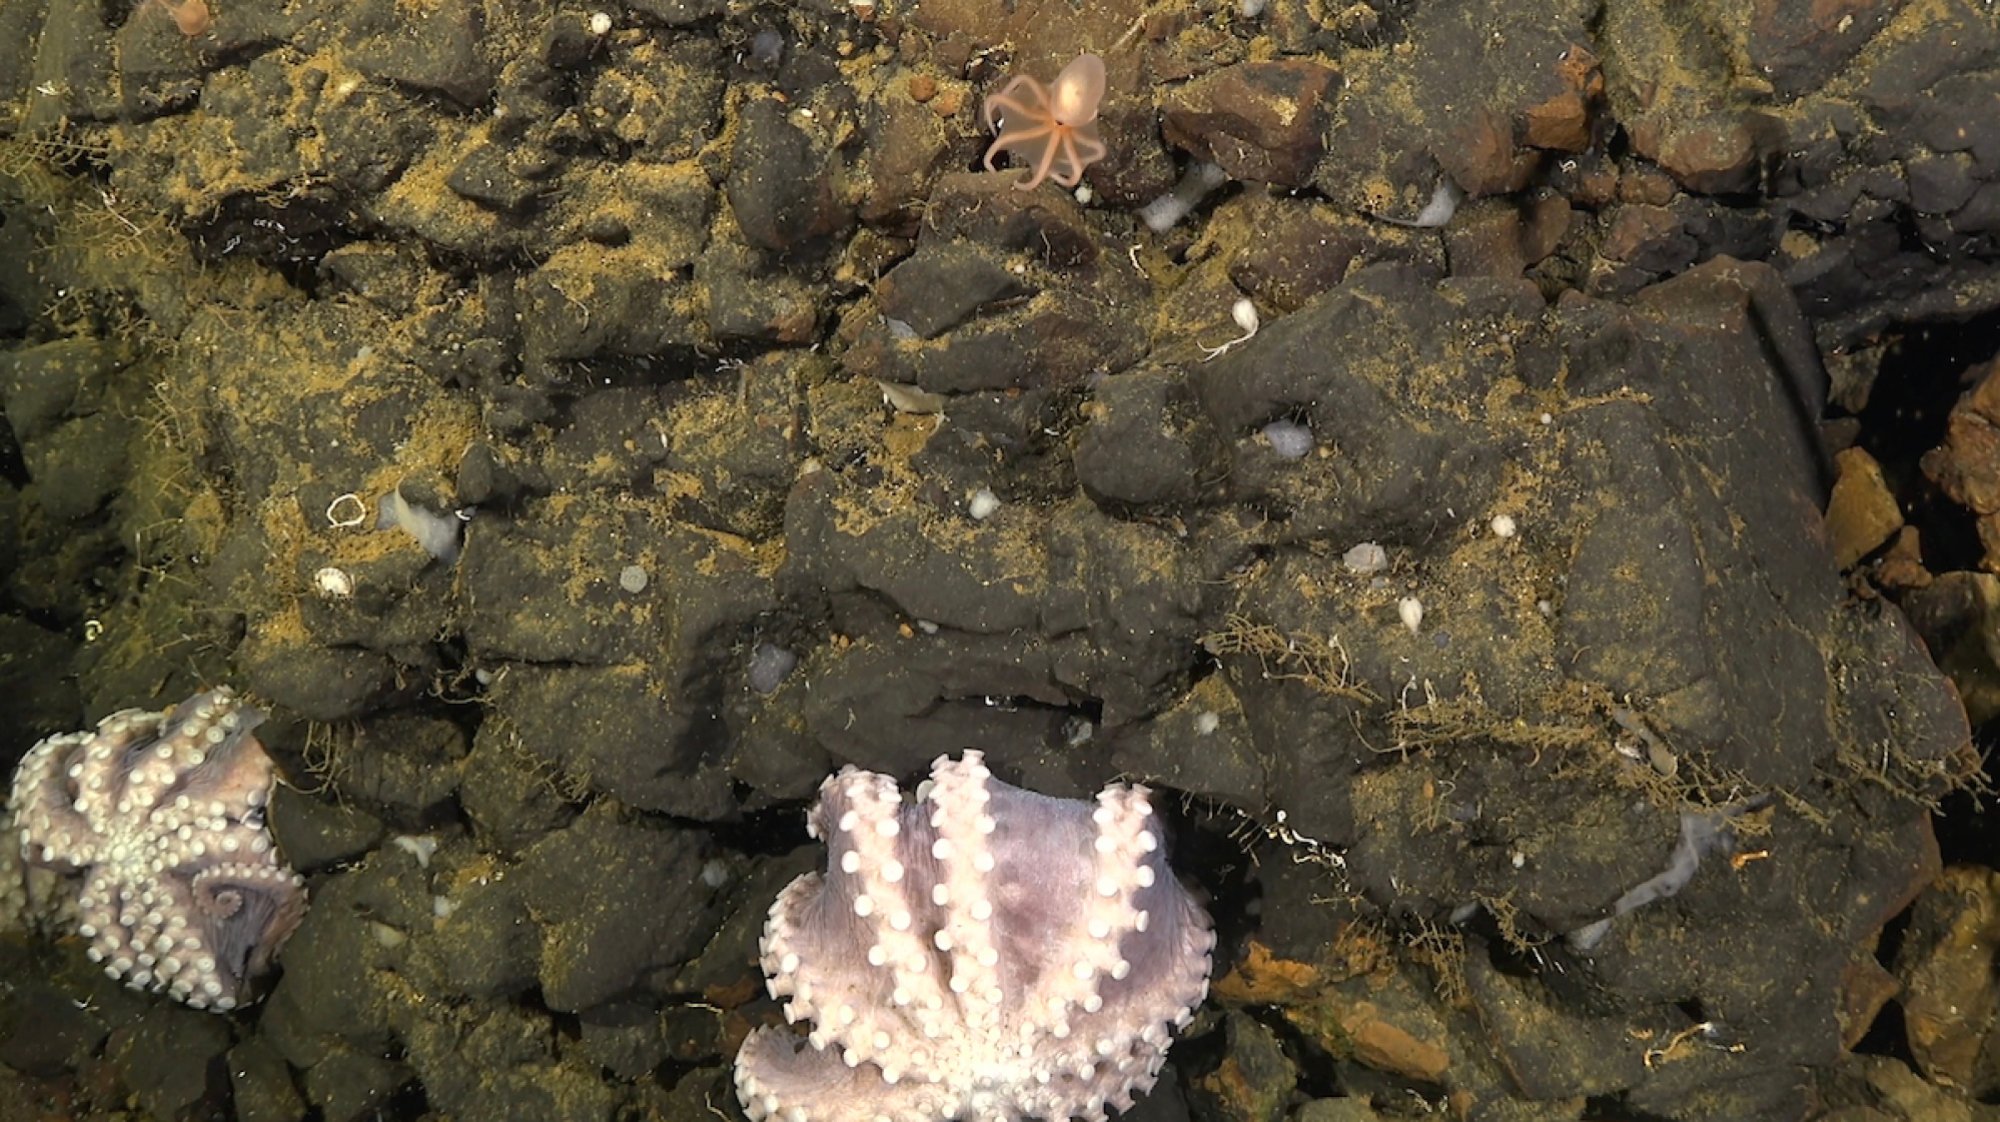 More newfound octopi in a deep sea nursery.